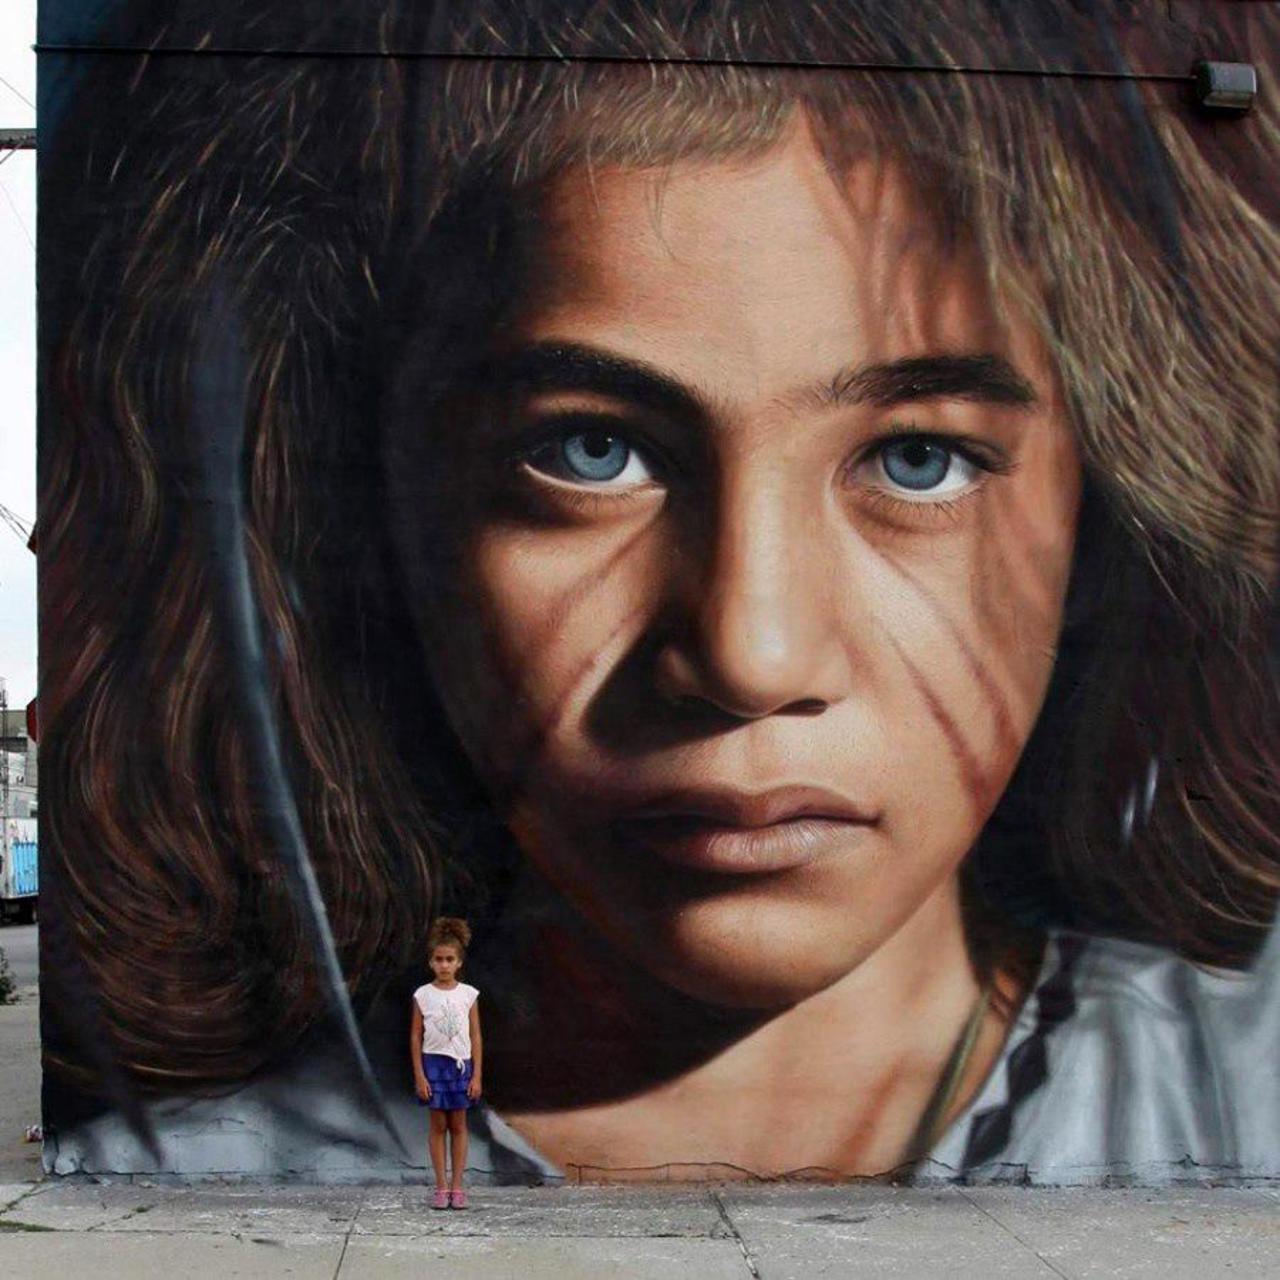 RT @artasfalt: Фотореалистичный стрит-арт 2015 
Нью-Йорк (США) 
Jorit AGOch 
#graffiti #streetart #NY http://t.co/S2xZ4KdBQ1